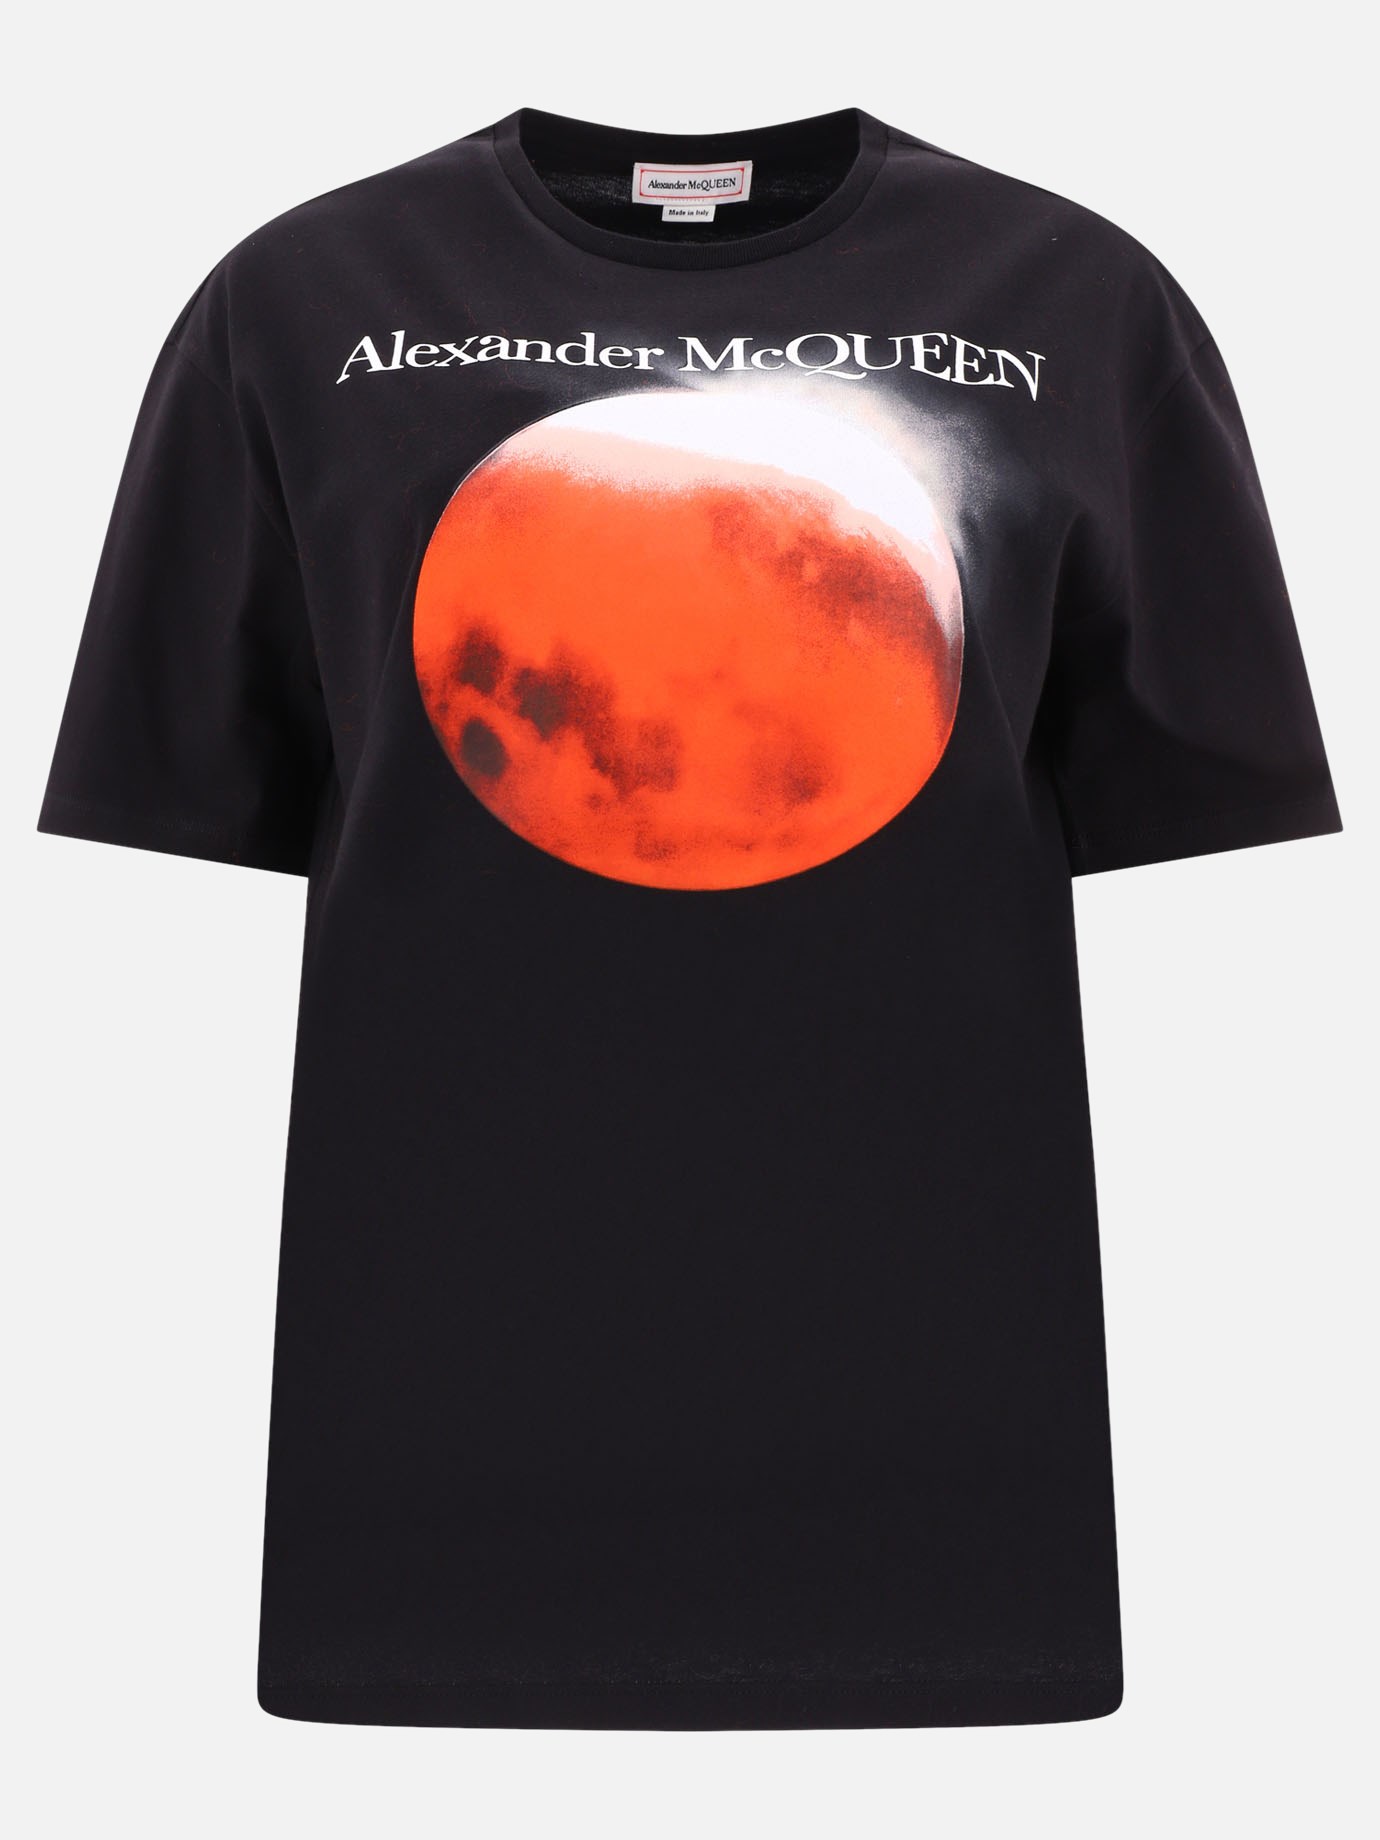  Red Moon  t-shirtby Alexander McQueen - 1